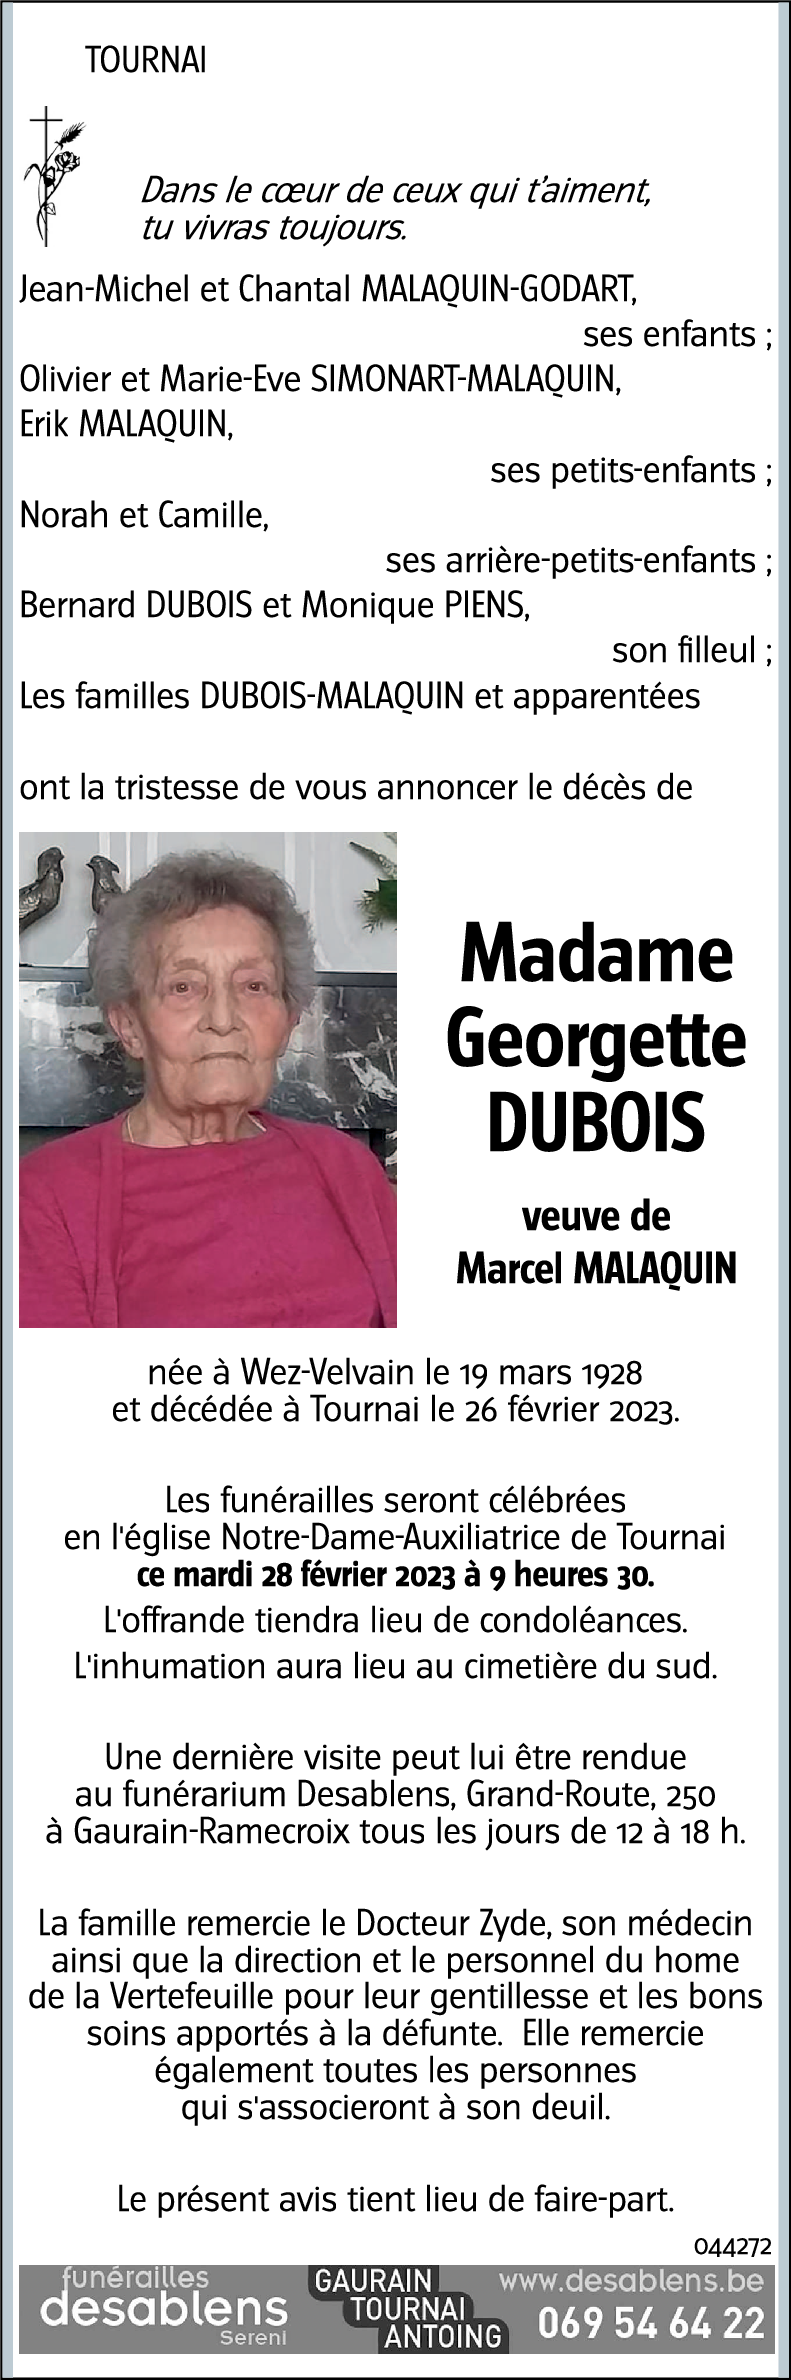 Georgette DUBOIS